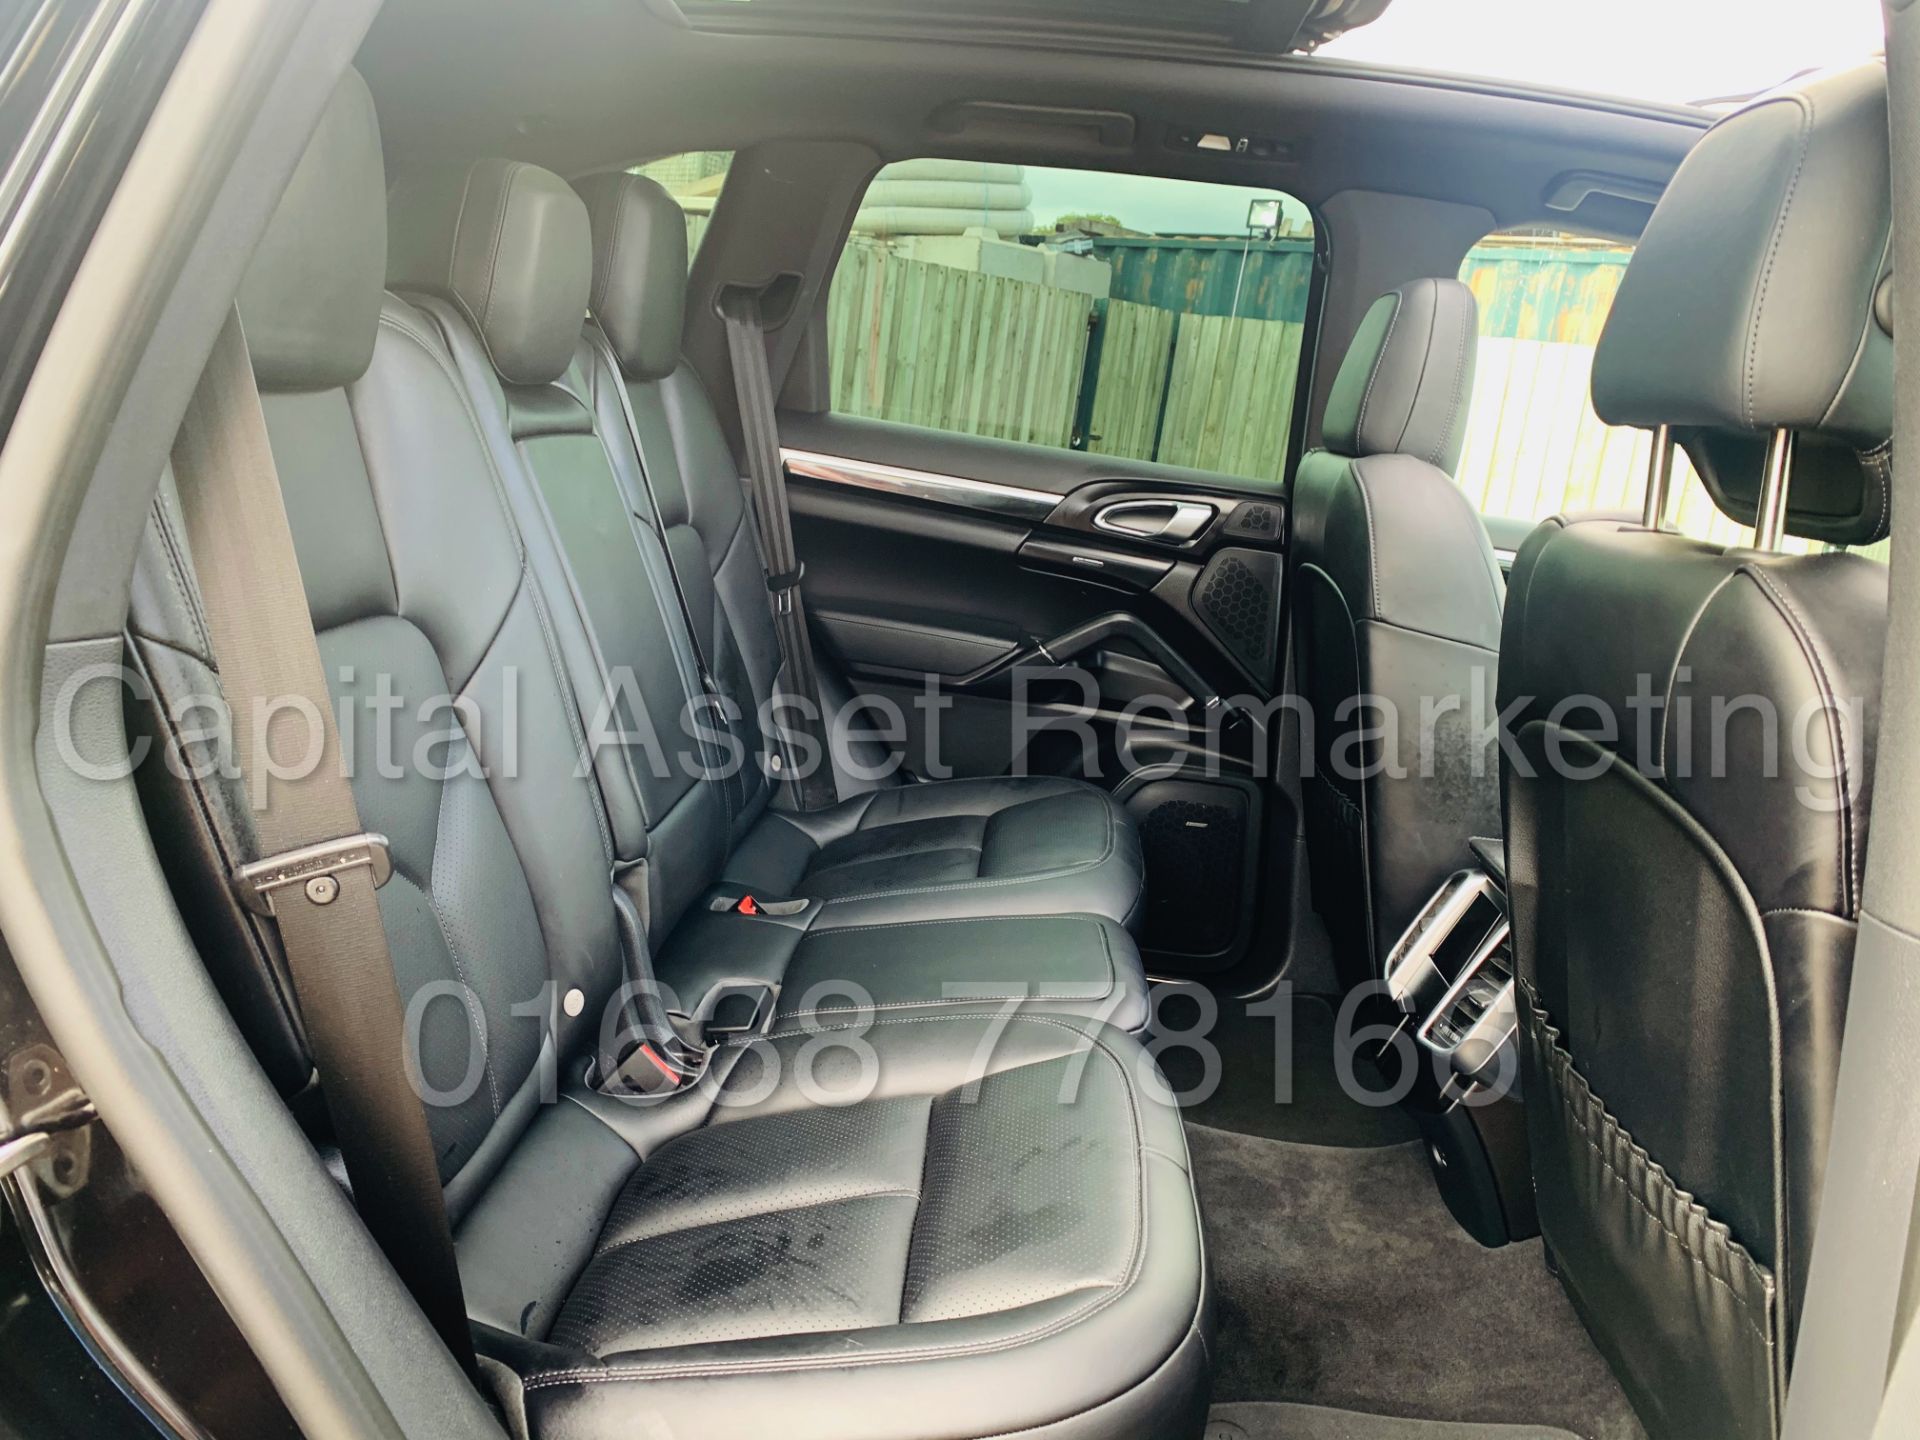 (On Sale) PORSCHE CAYENNE *SPORTS SUV* (2018) '3.0 V6 DIESEL -262 BHP- 8 SPEED AUTO' *ULTIMATE SPEC* - Image 35 of 62